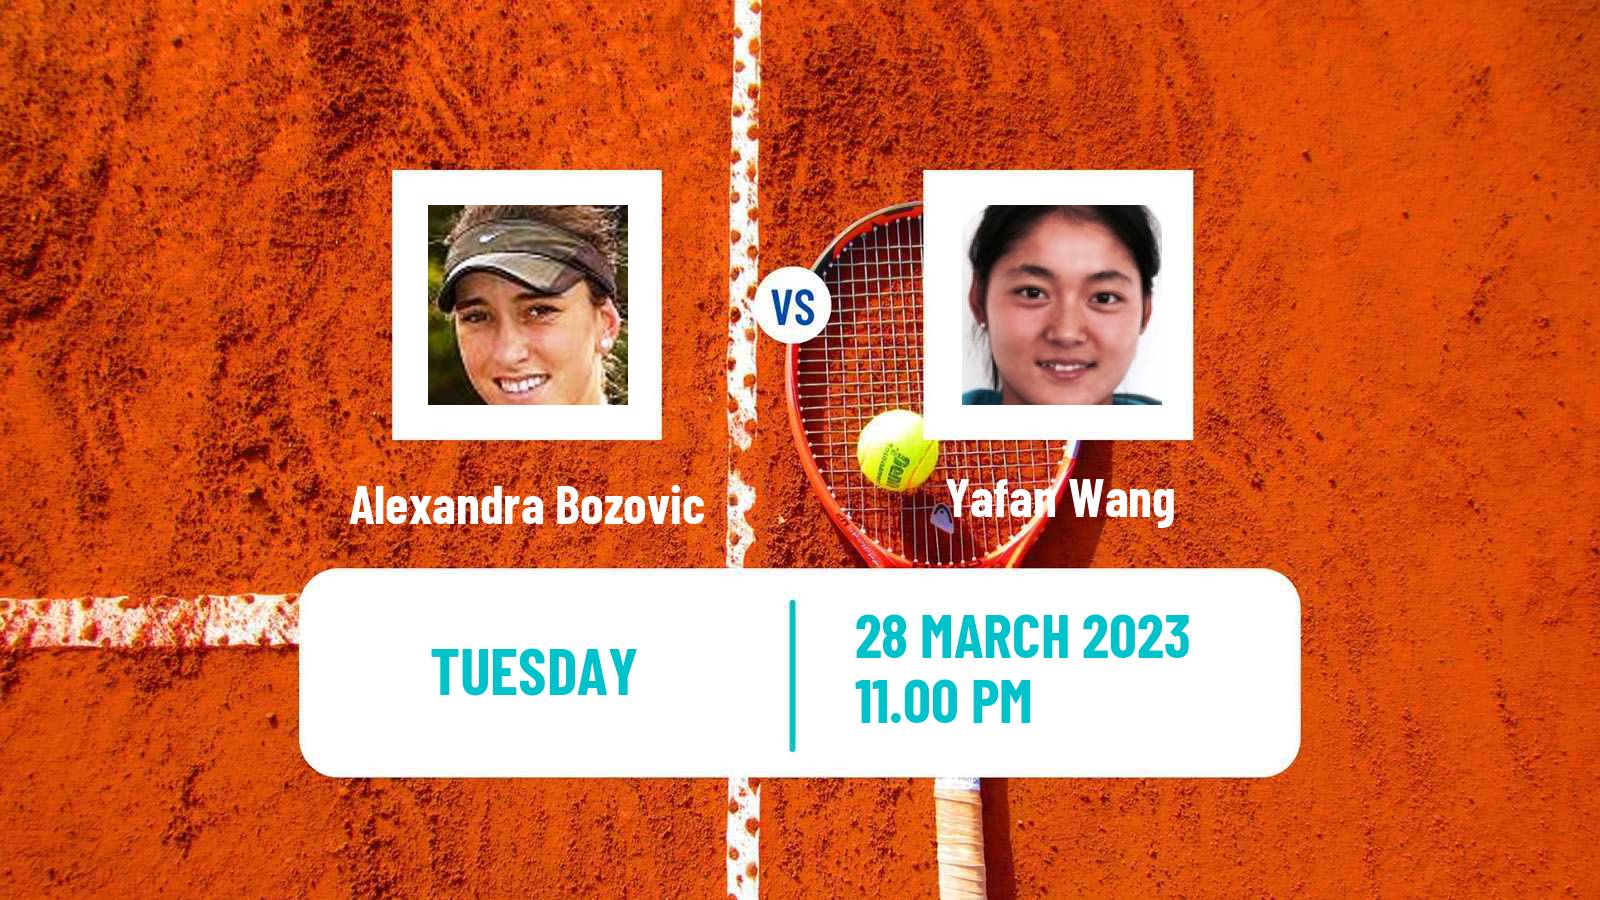 Tennis ITF Tournaments Alexandra Bozovic - Yafan Wang